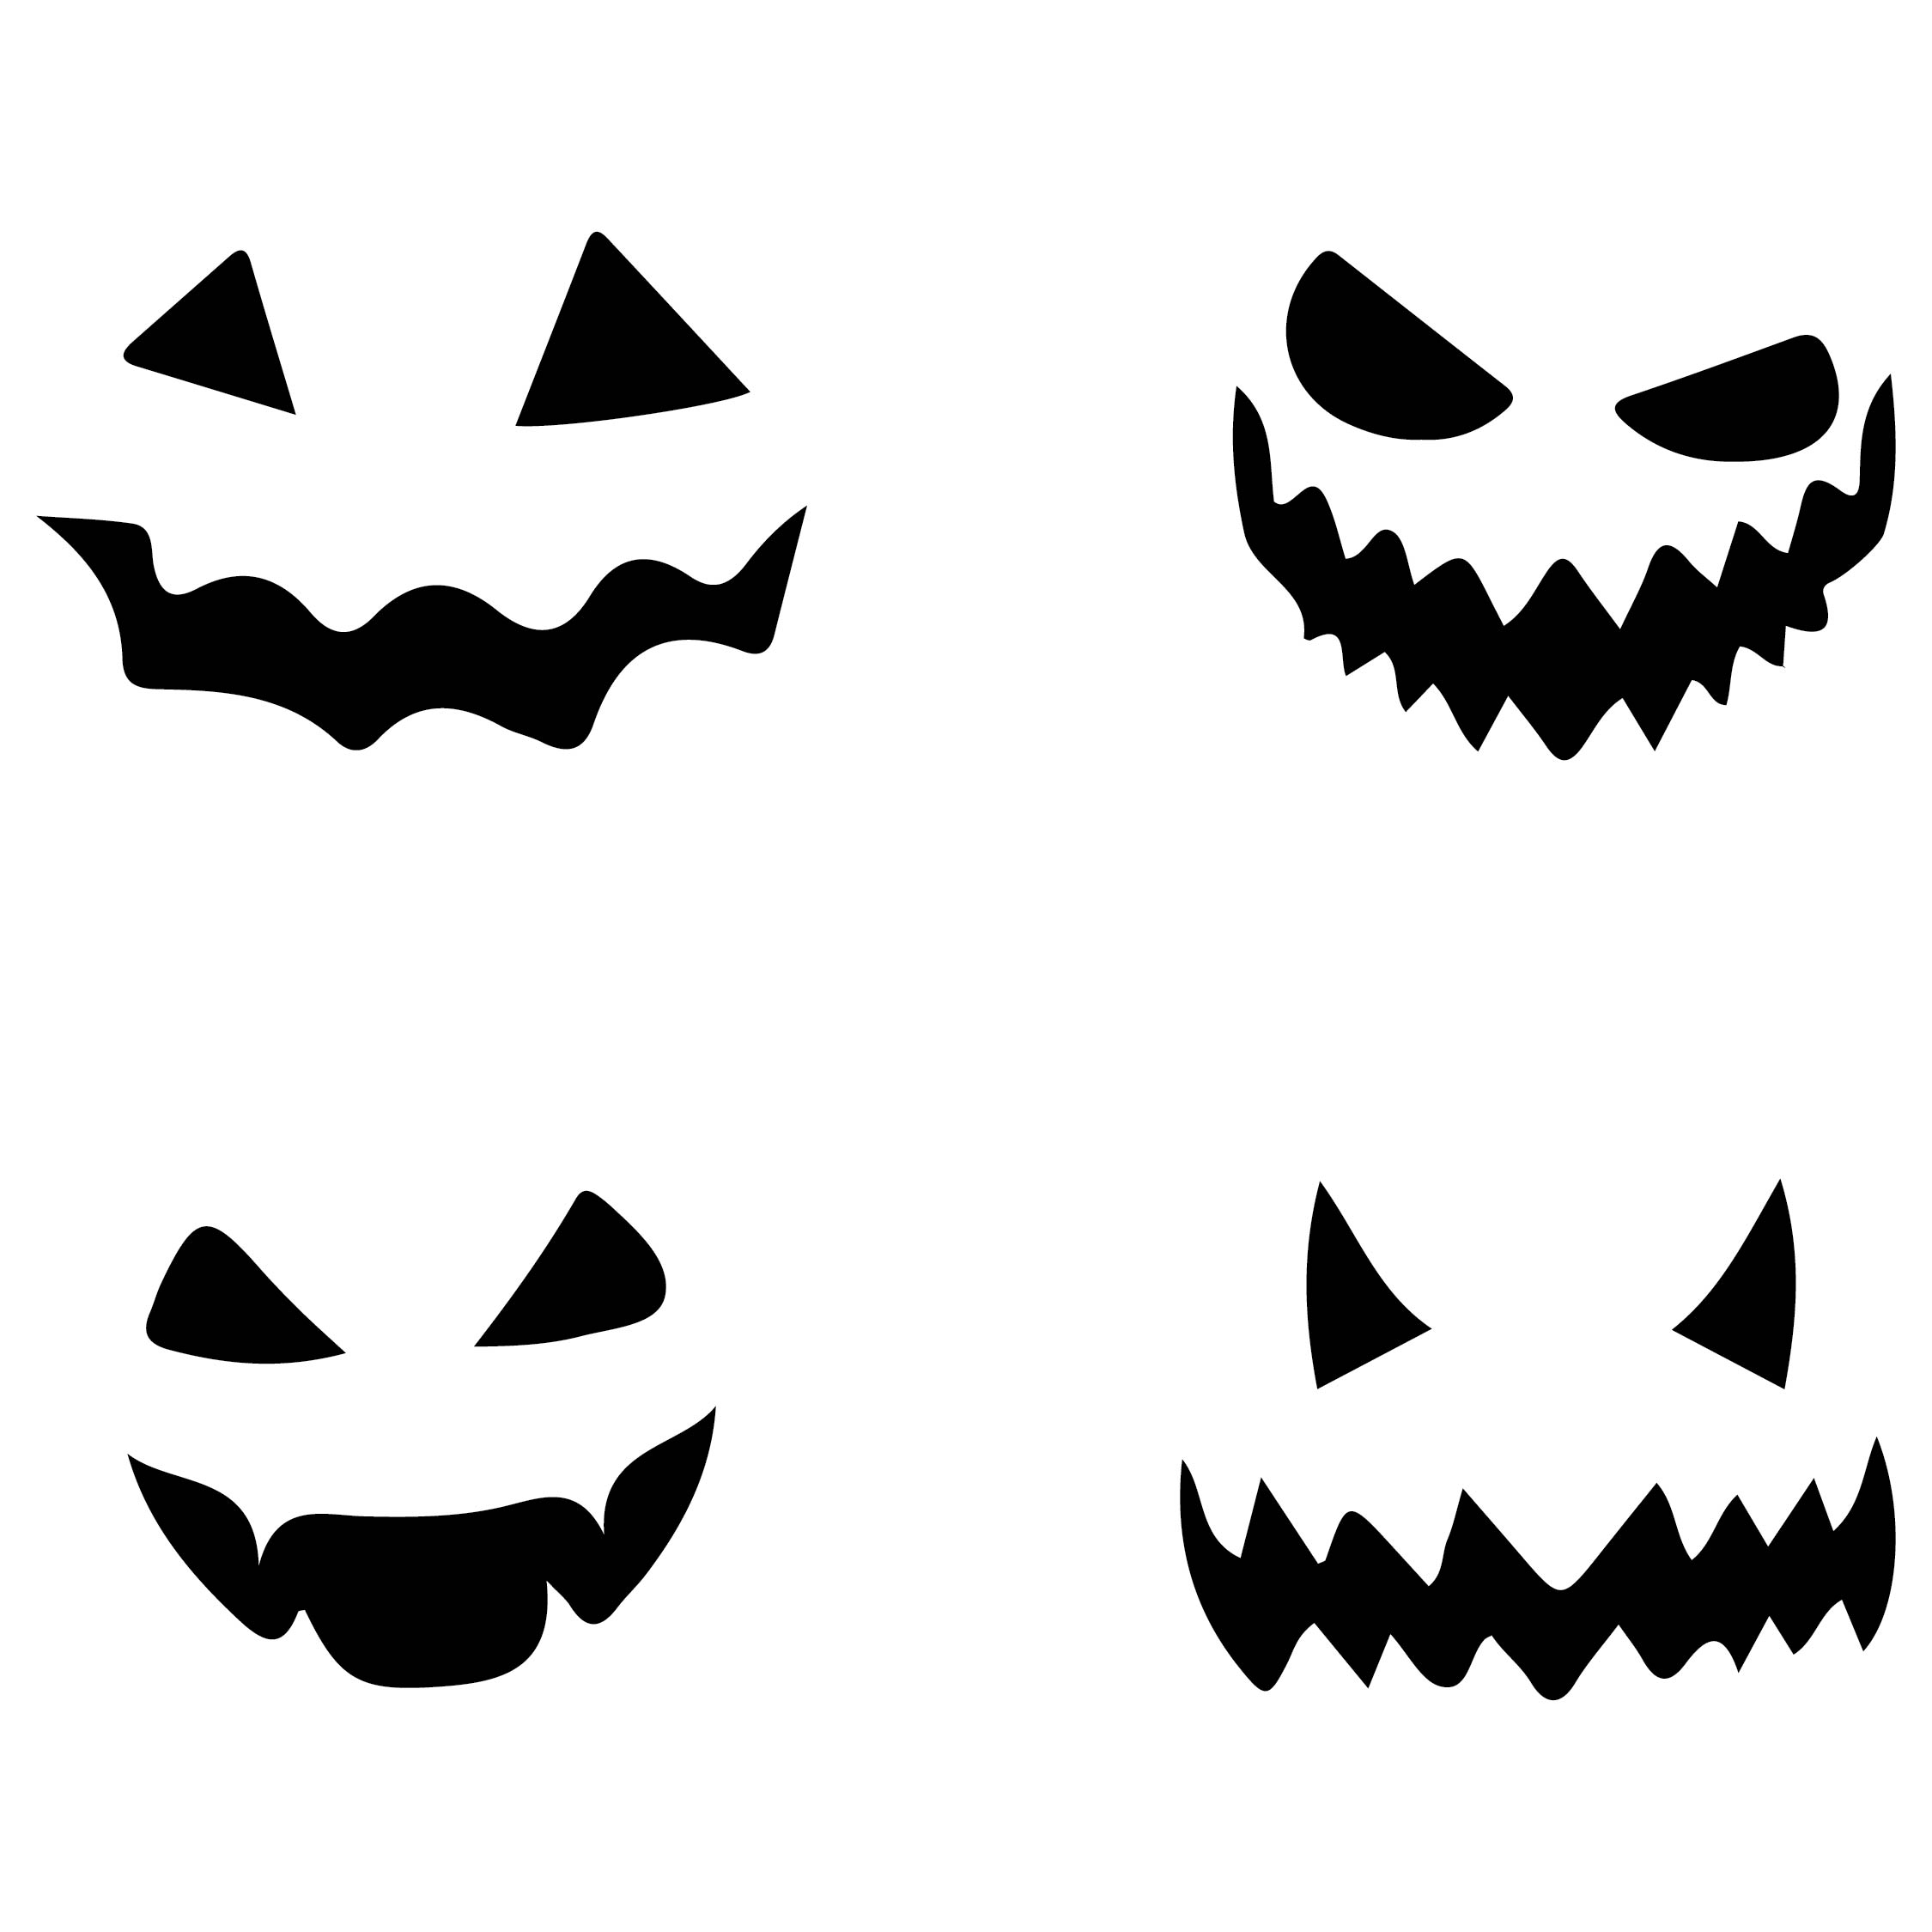 6 Best Images of Halloween Pumpkin Stencils Printable - Printable ...